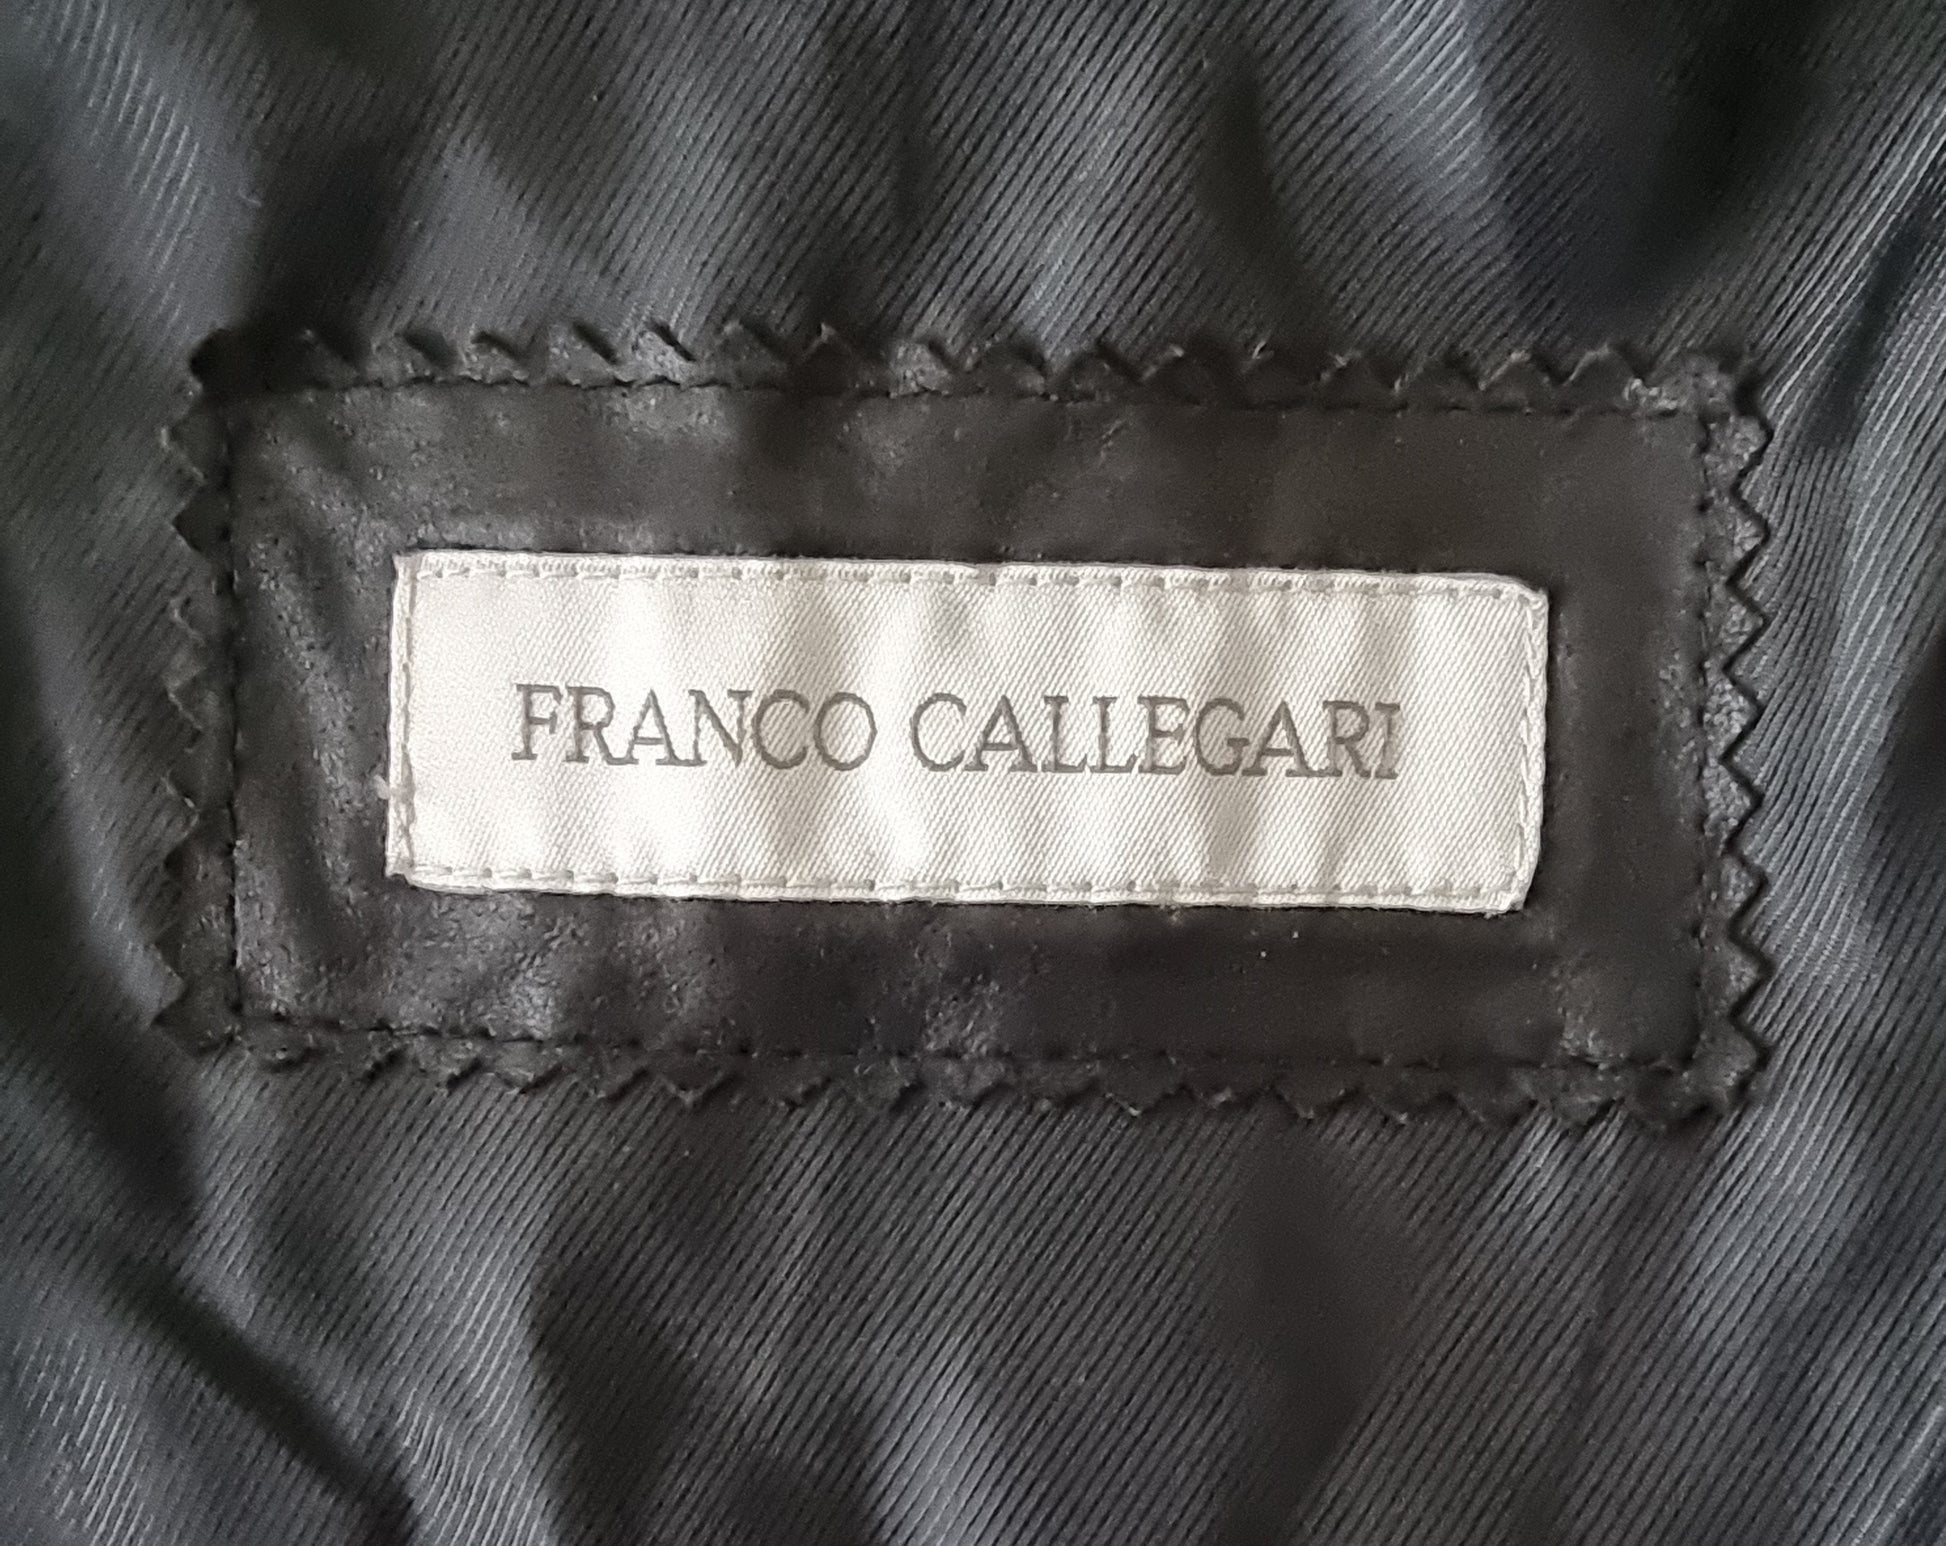 Franco Callegari Women's Vintage Longline Black Leather Jacket UK 14 US 10 EU 42 IT 46 Timeless Fashions